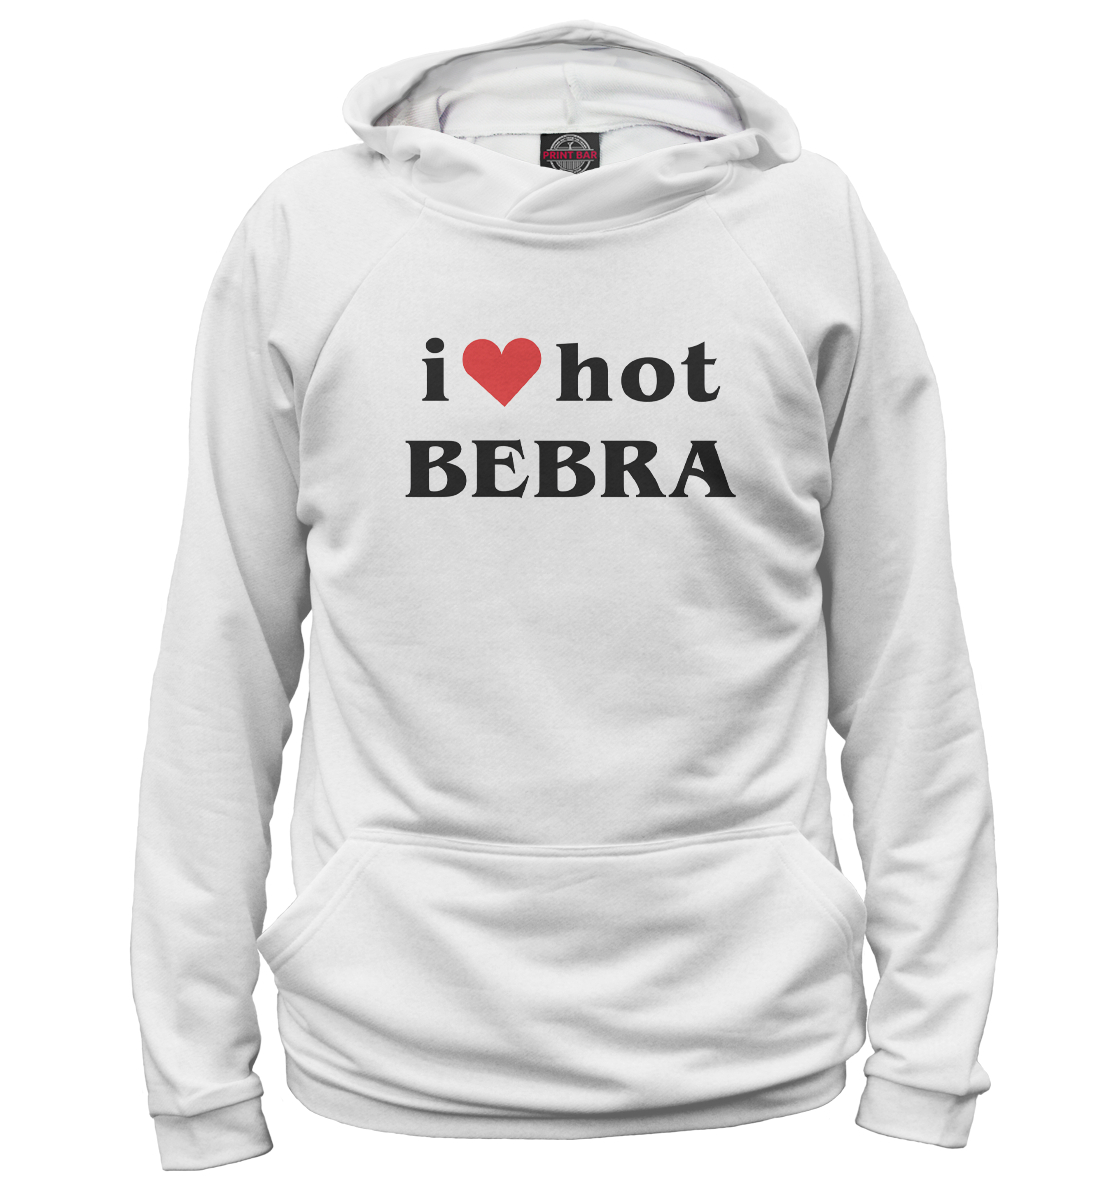 I love hot bebra. Футболка i Love hot Bebra. Худи i Love hot Bebra. I Love Bebra худи. Кофта i Love hot Bebra.